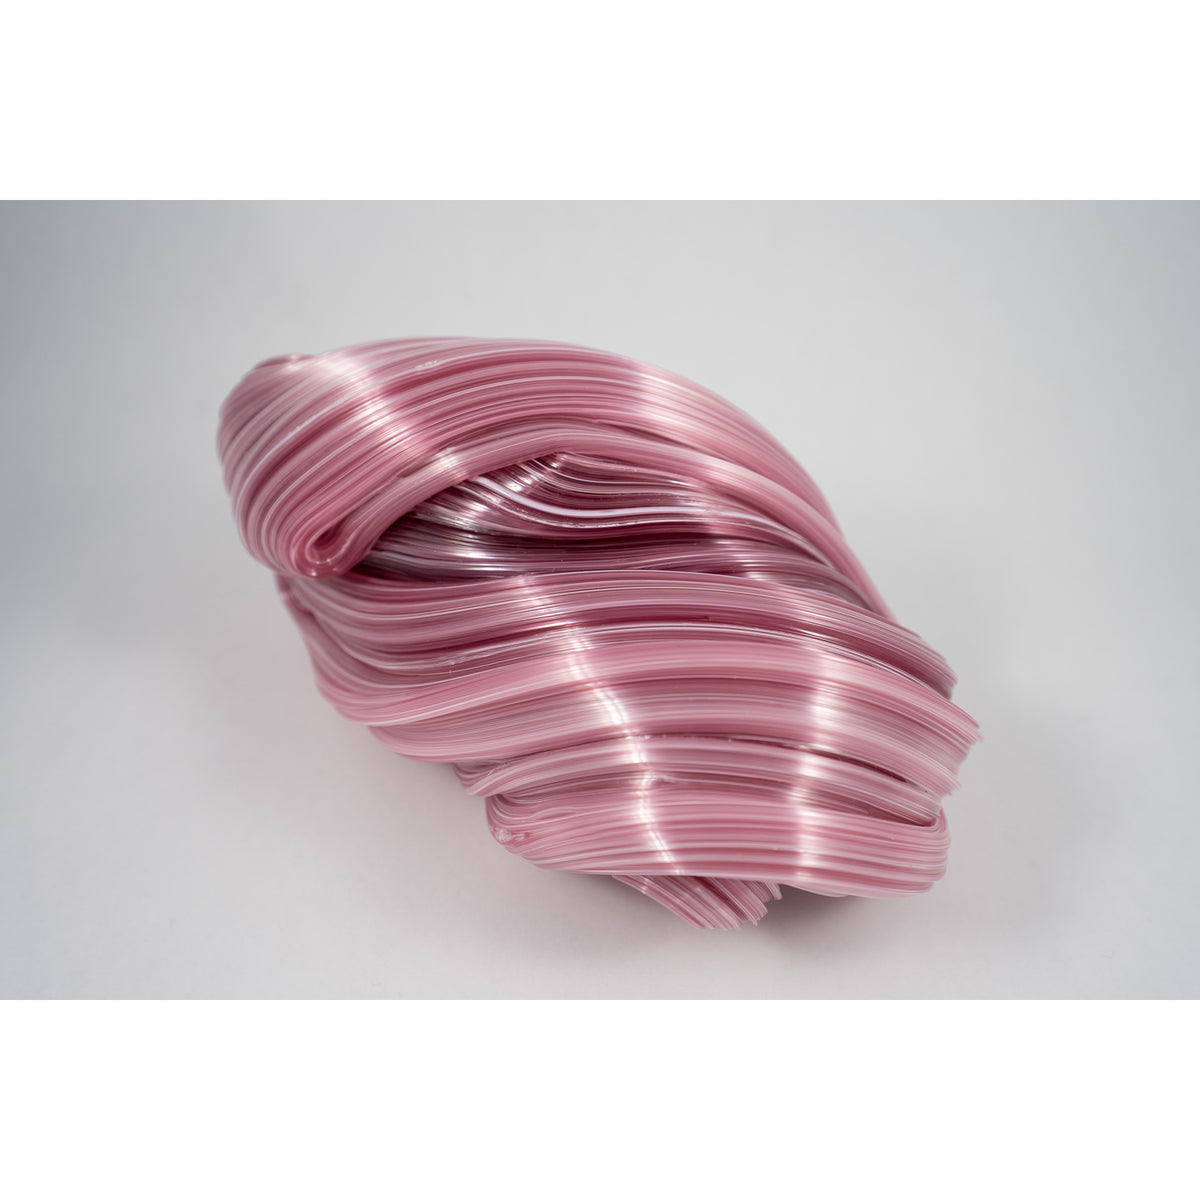 Taygan Appleton - Silk Knot Strawberry Shortcake, 4.5" x 9" x 4.5"